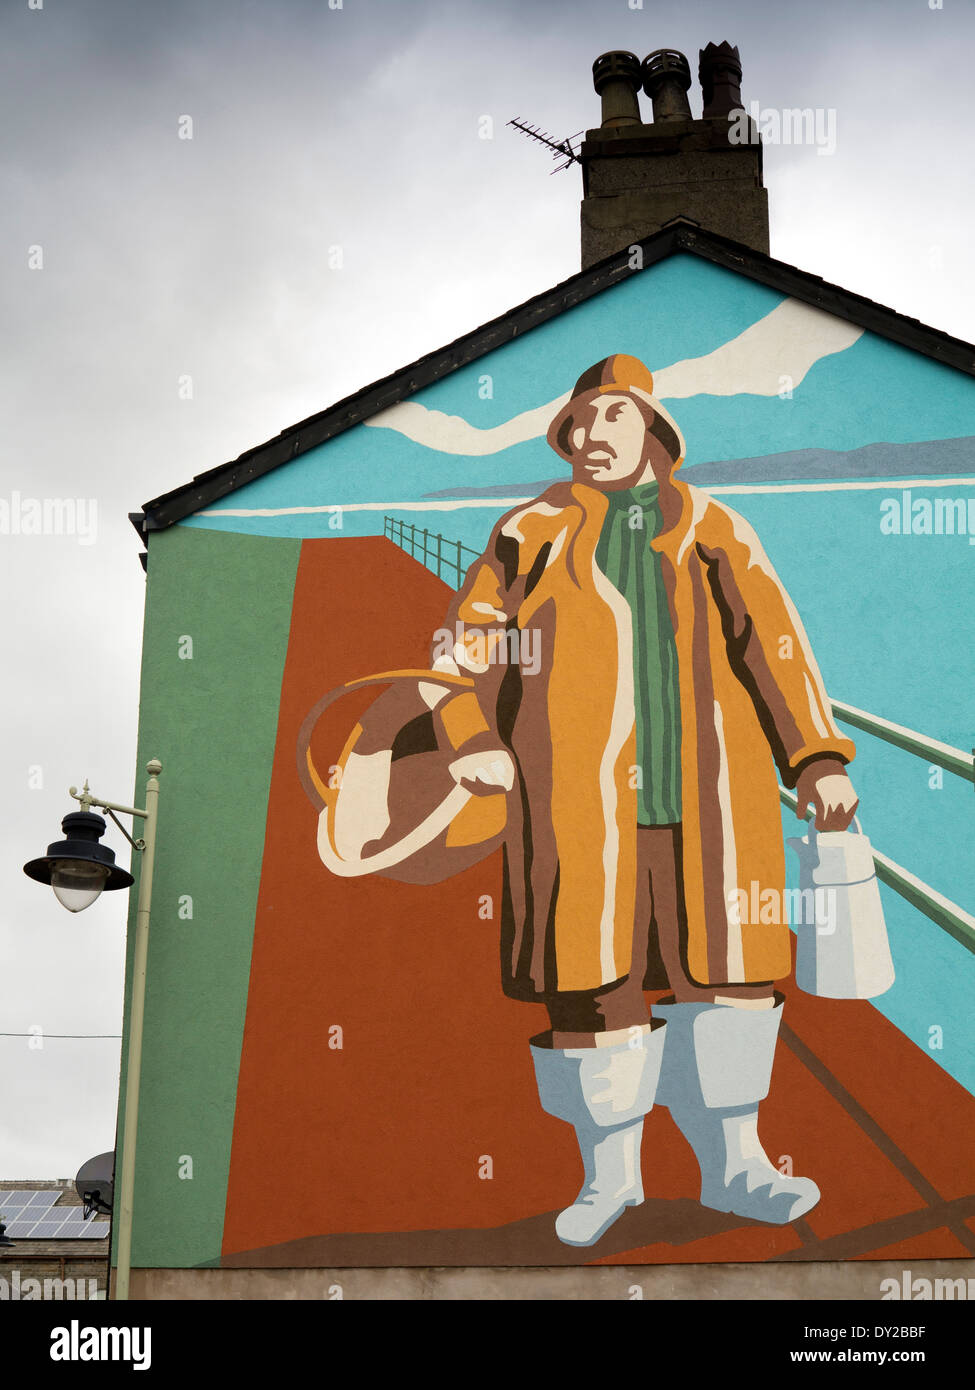 UK, England, Lancashire, Morecambe, Trawler Square, fisherman mural on house gable end Stock Photo